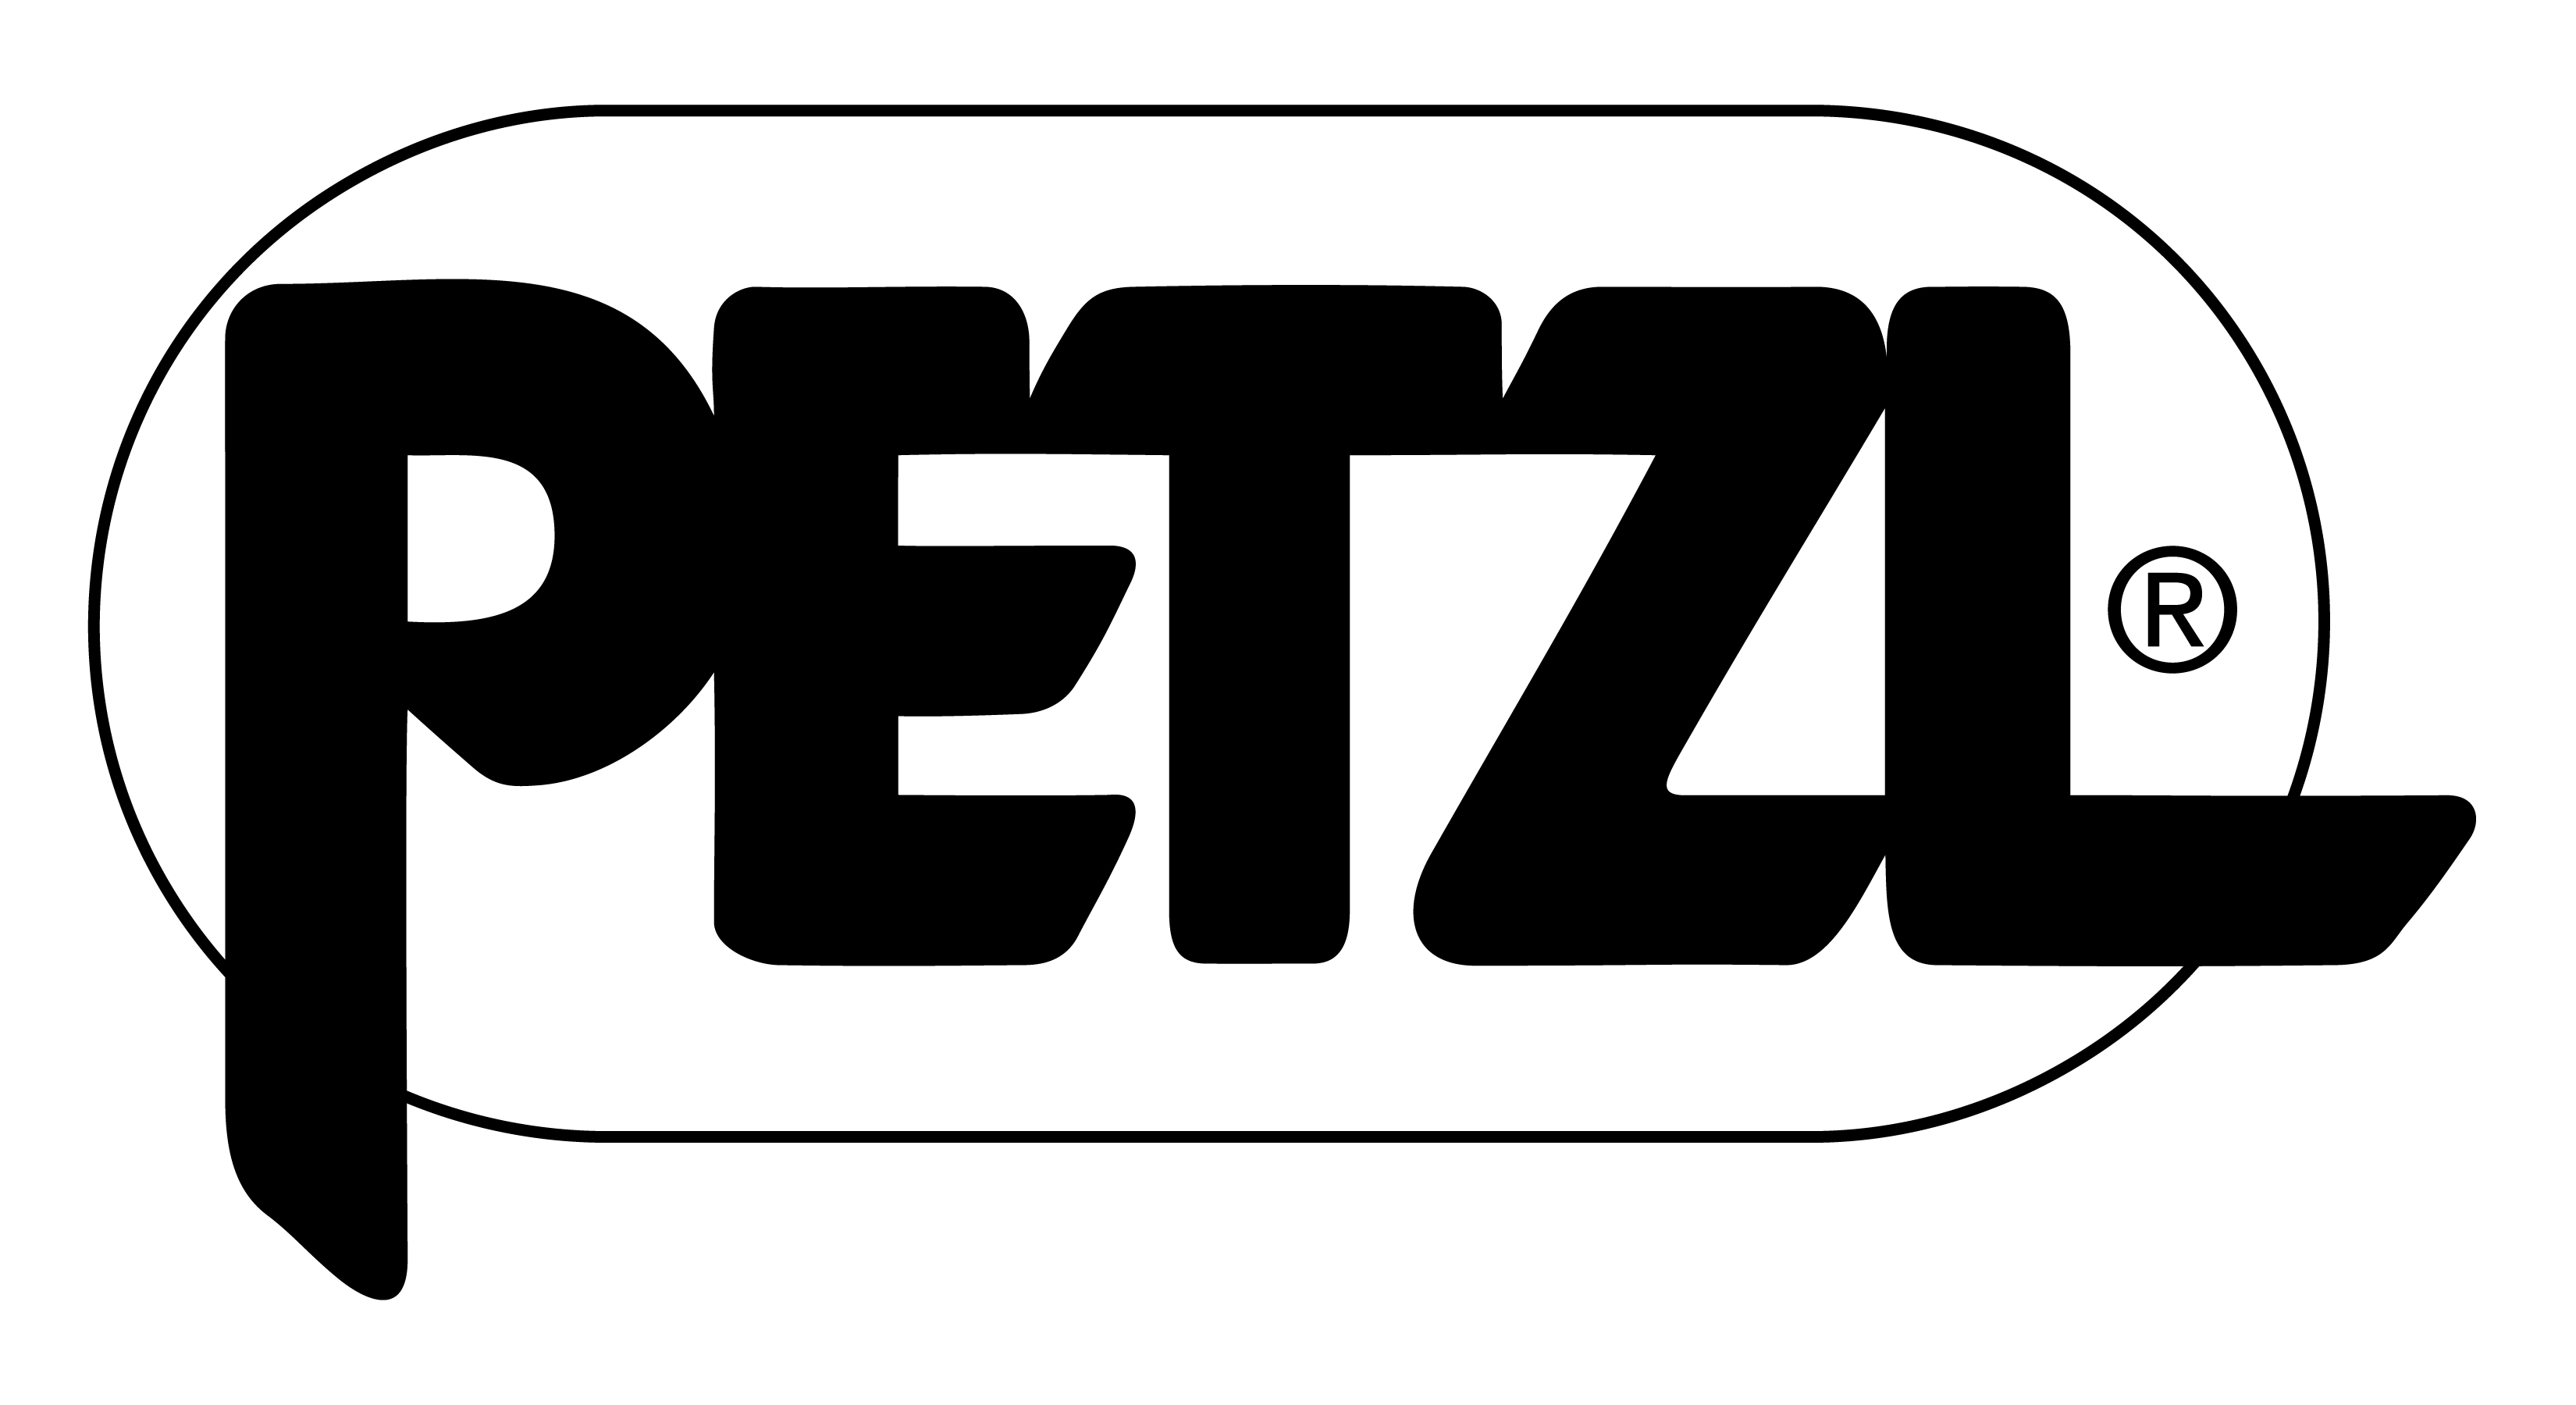 Petzl America